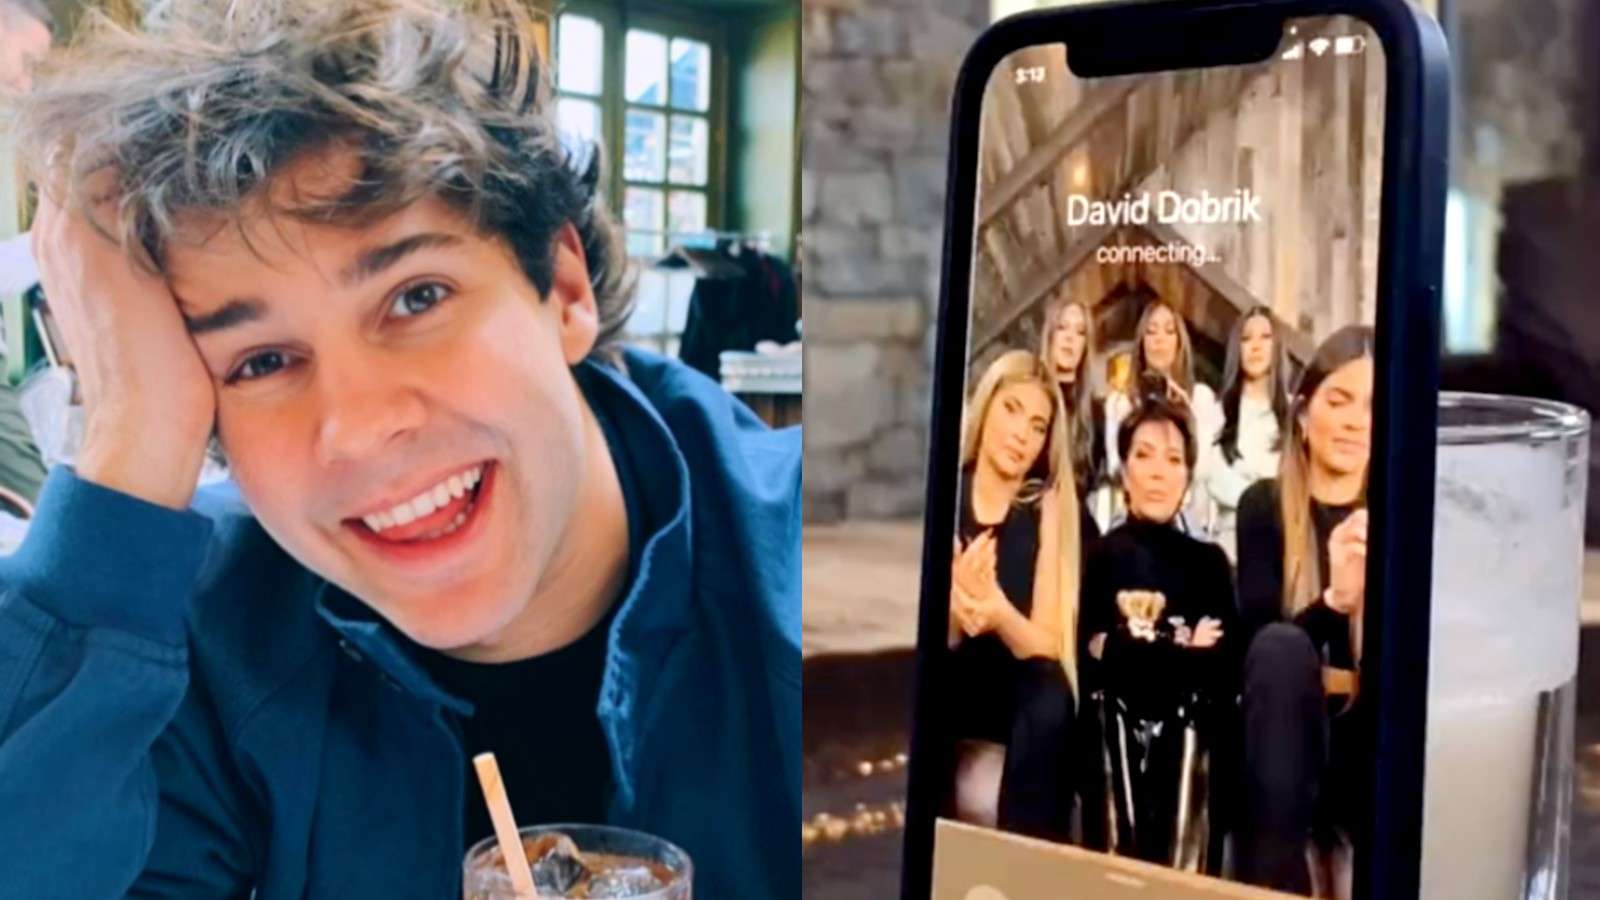 David Dobrik next to an image of the Kardashian family inside a phone